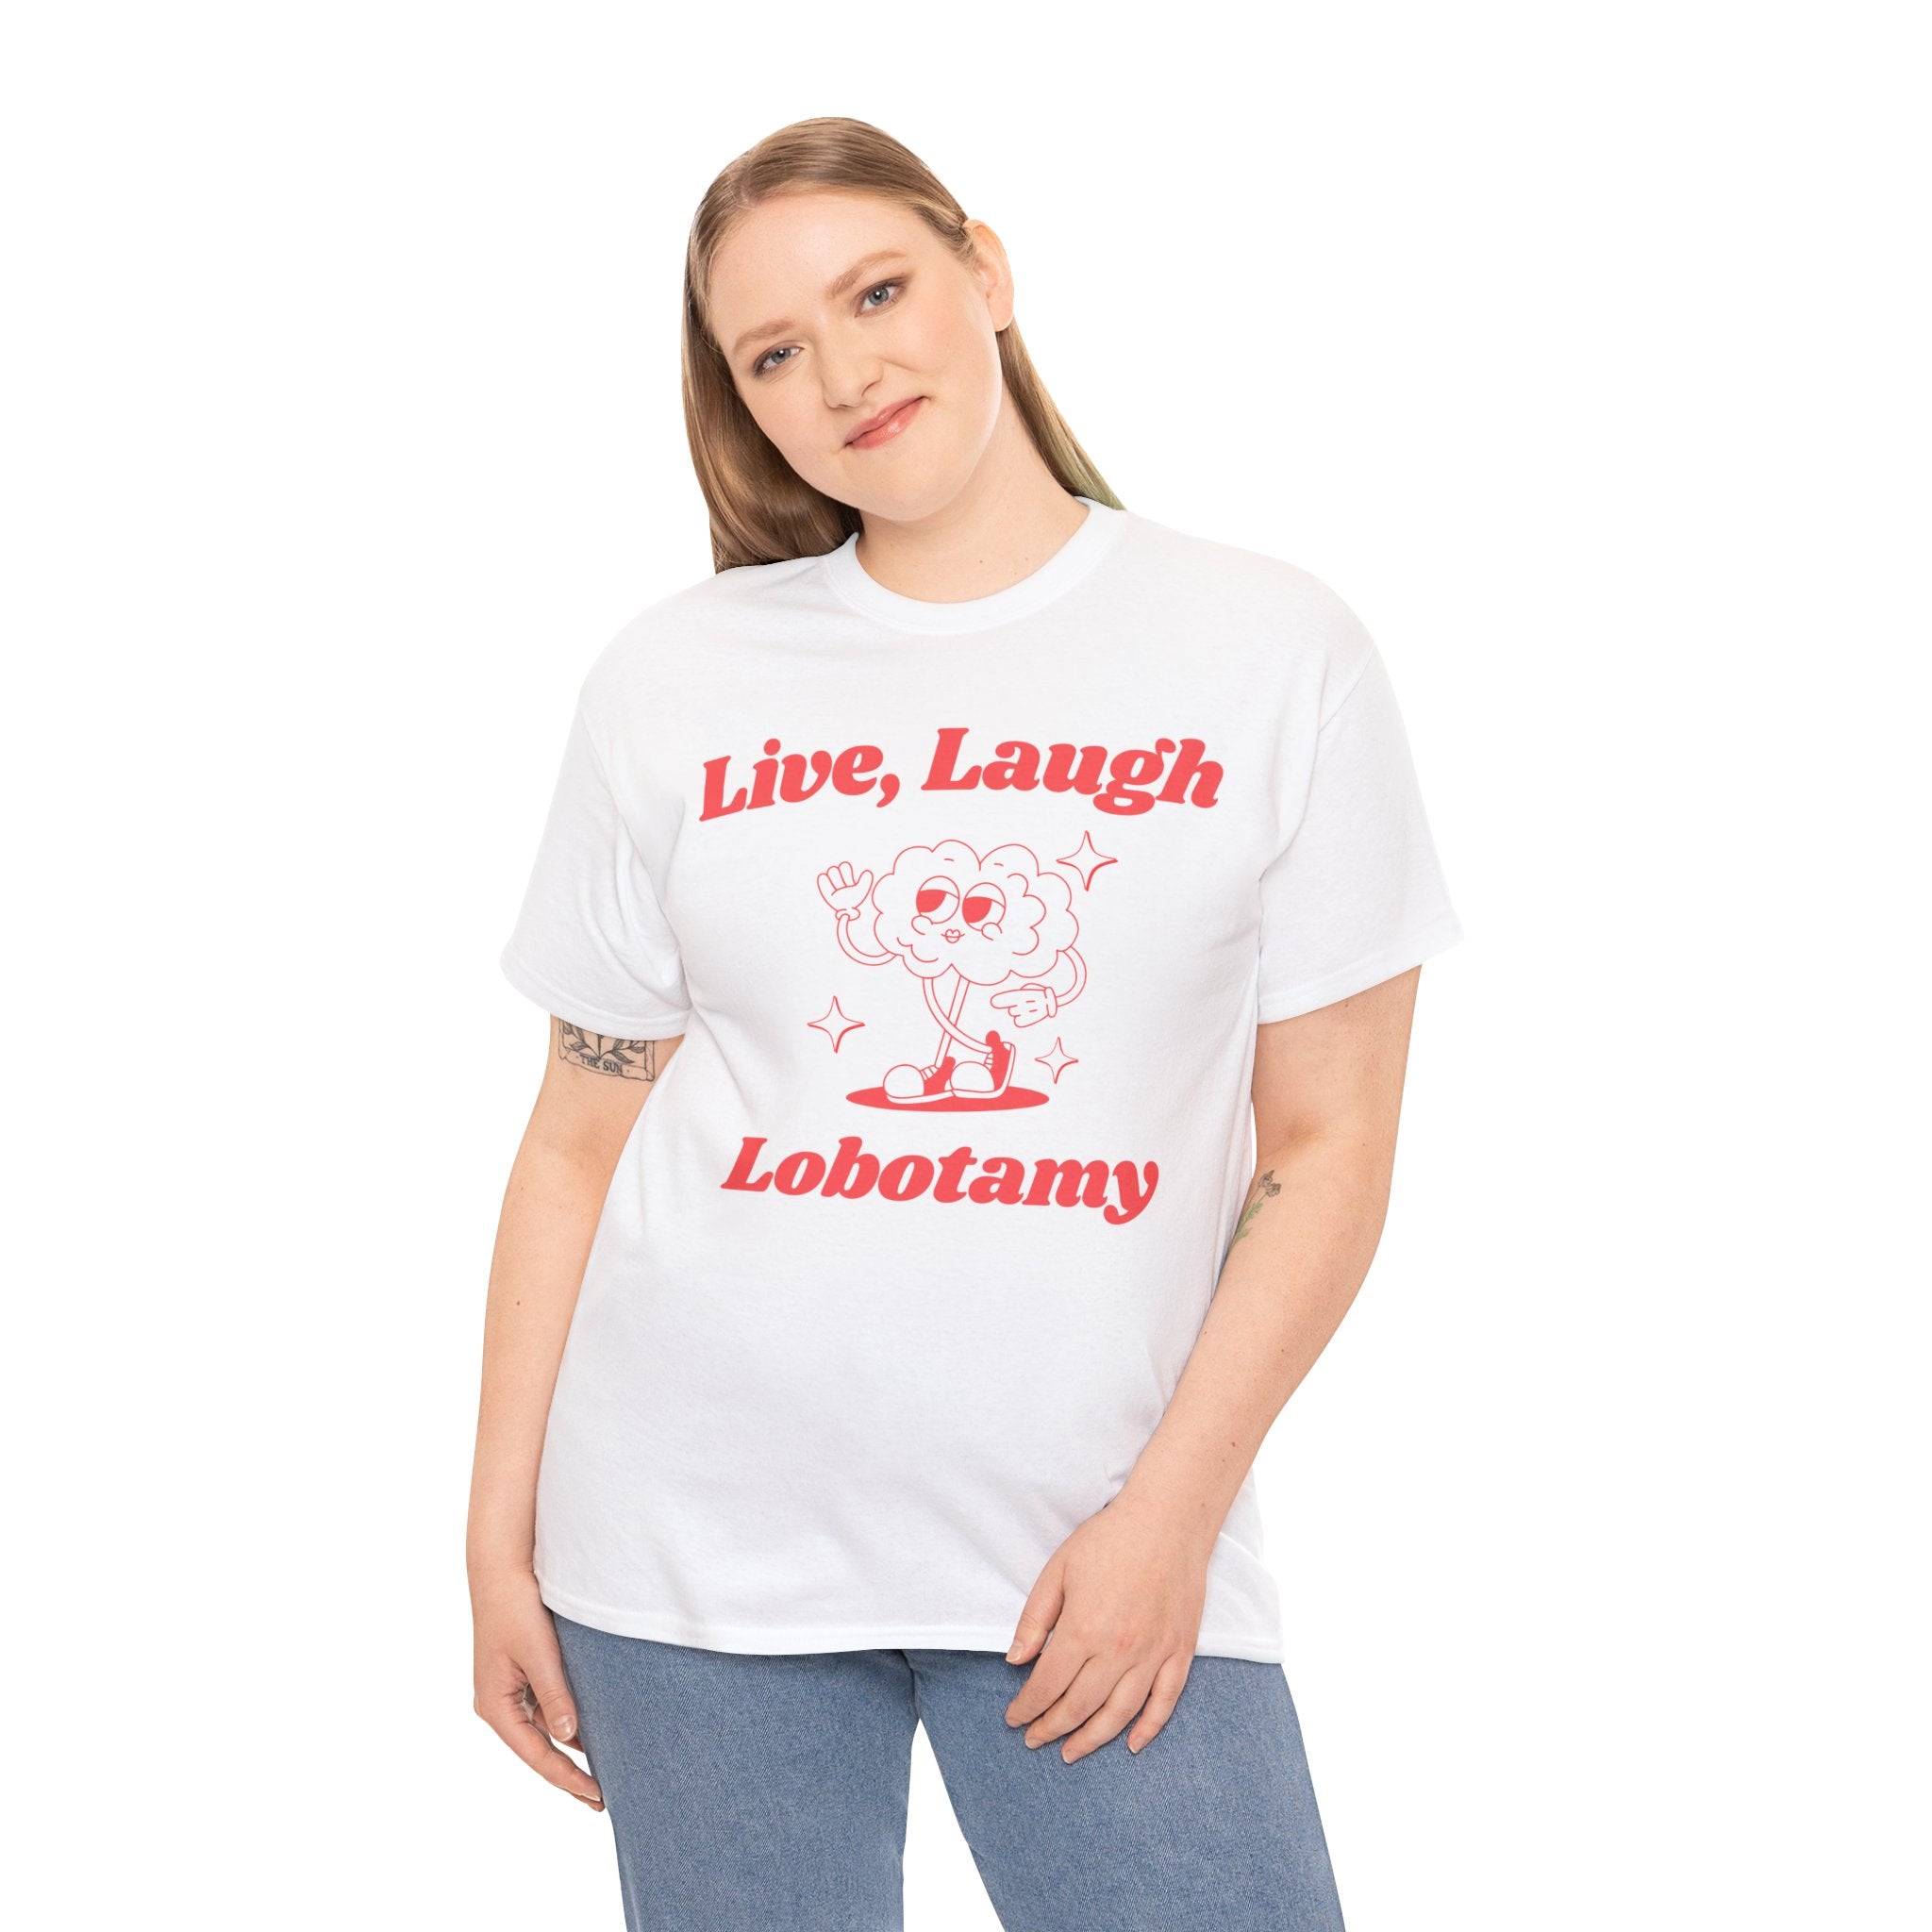 Live, Laugh, Lobotomy funny shirt | funny saying shirt | graphic tees | vintage shirt | sarcastic t-shirt | retro cartoon shirt | meme shirt